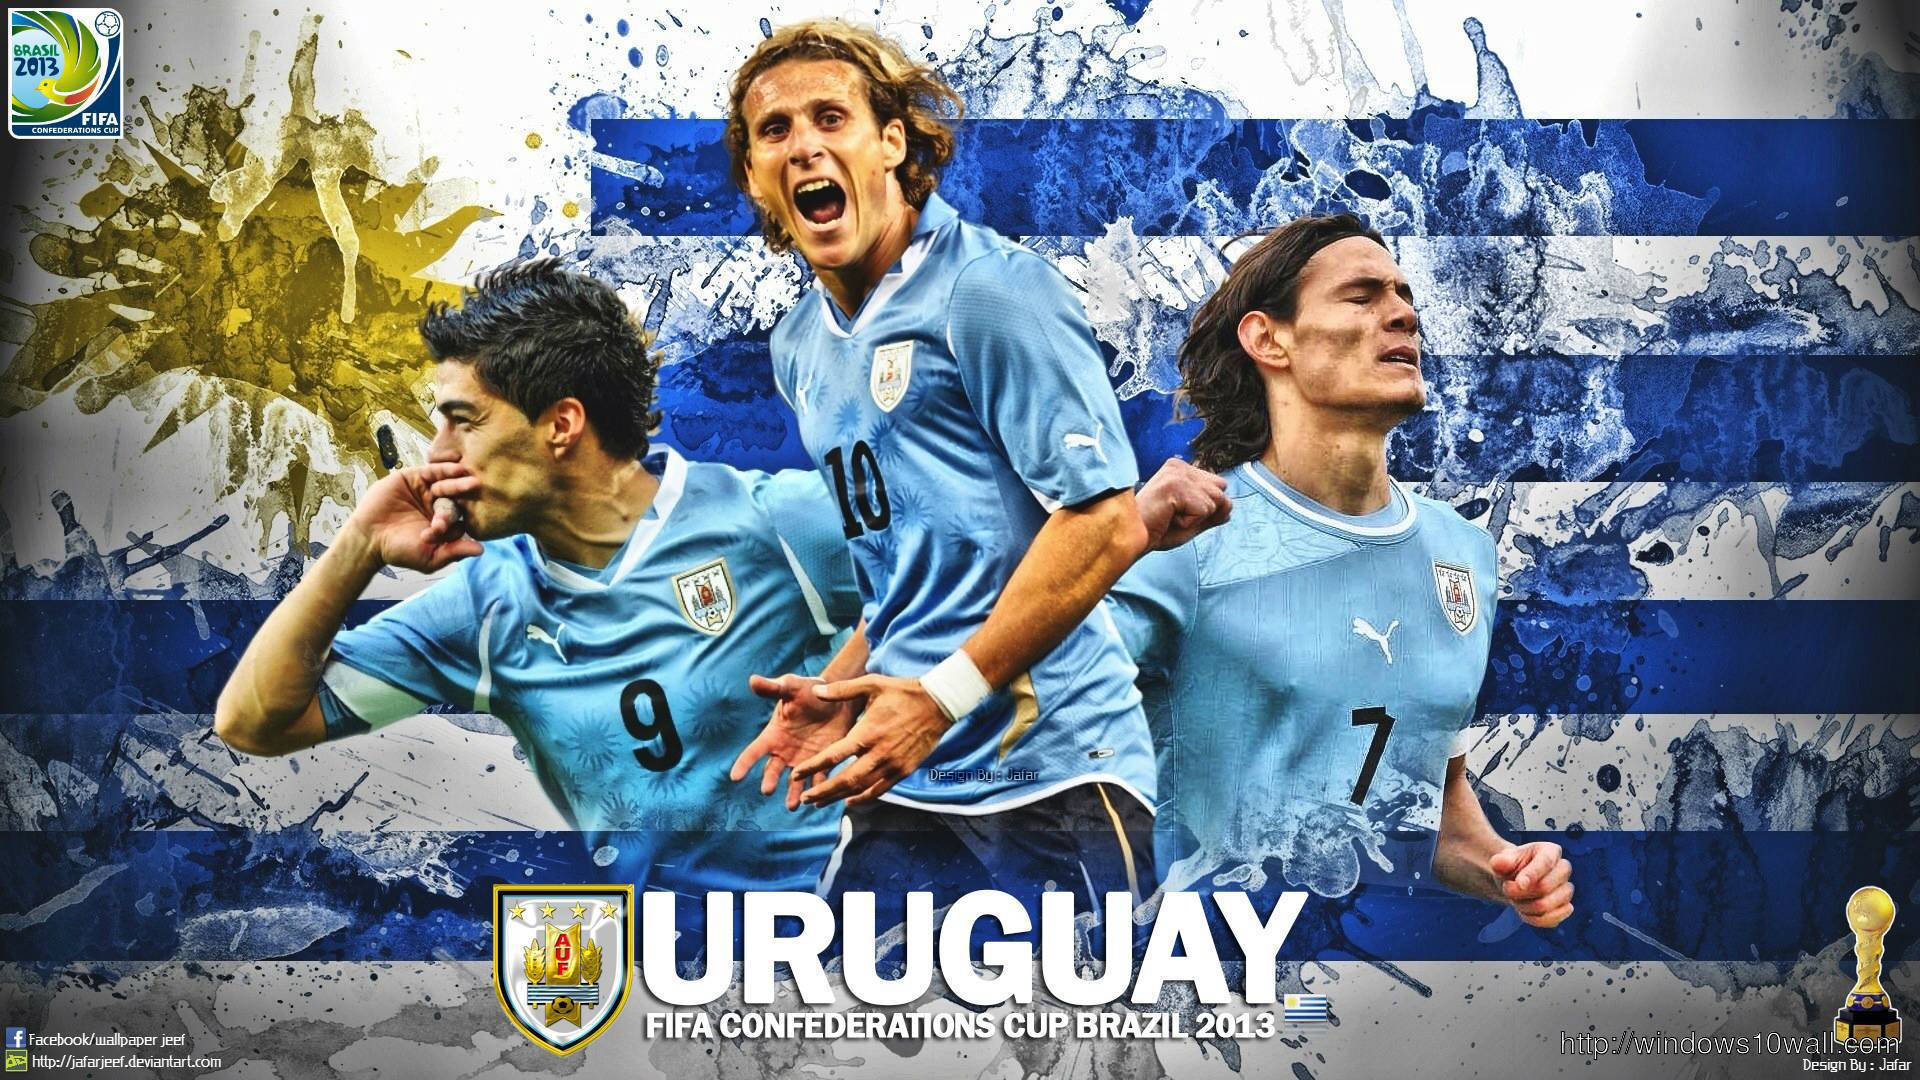 Uruguay Team In Fifa Cup Brazil